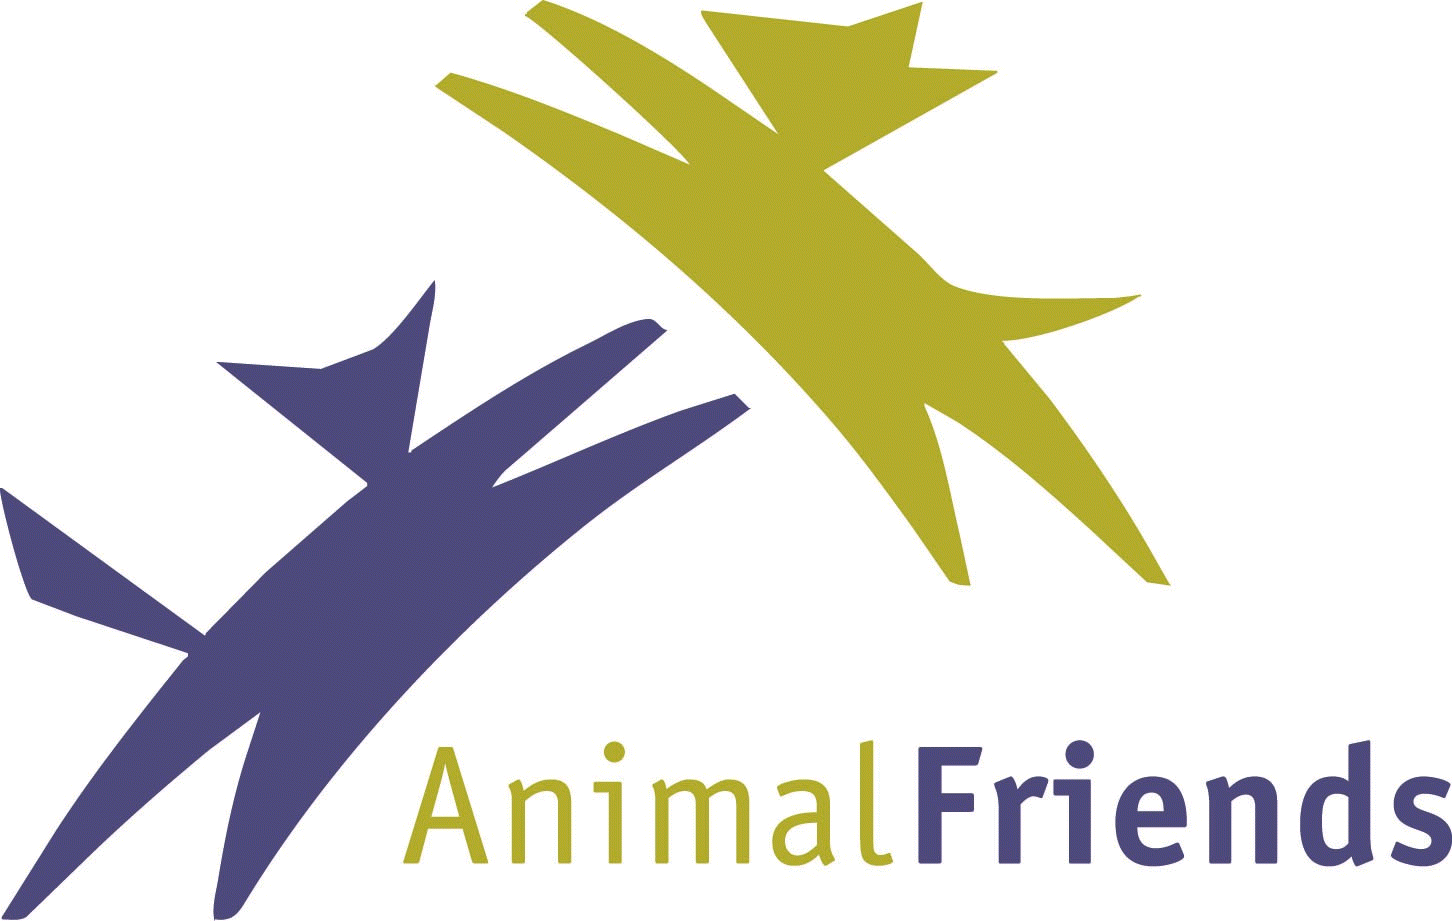 Animal friends Logos